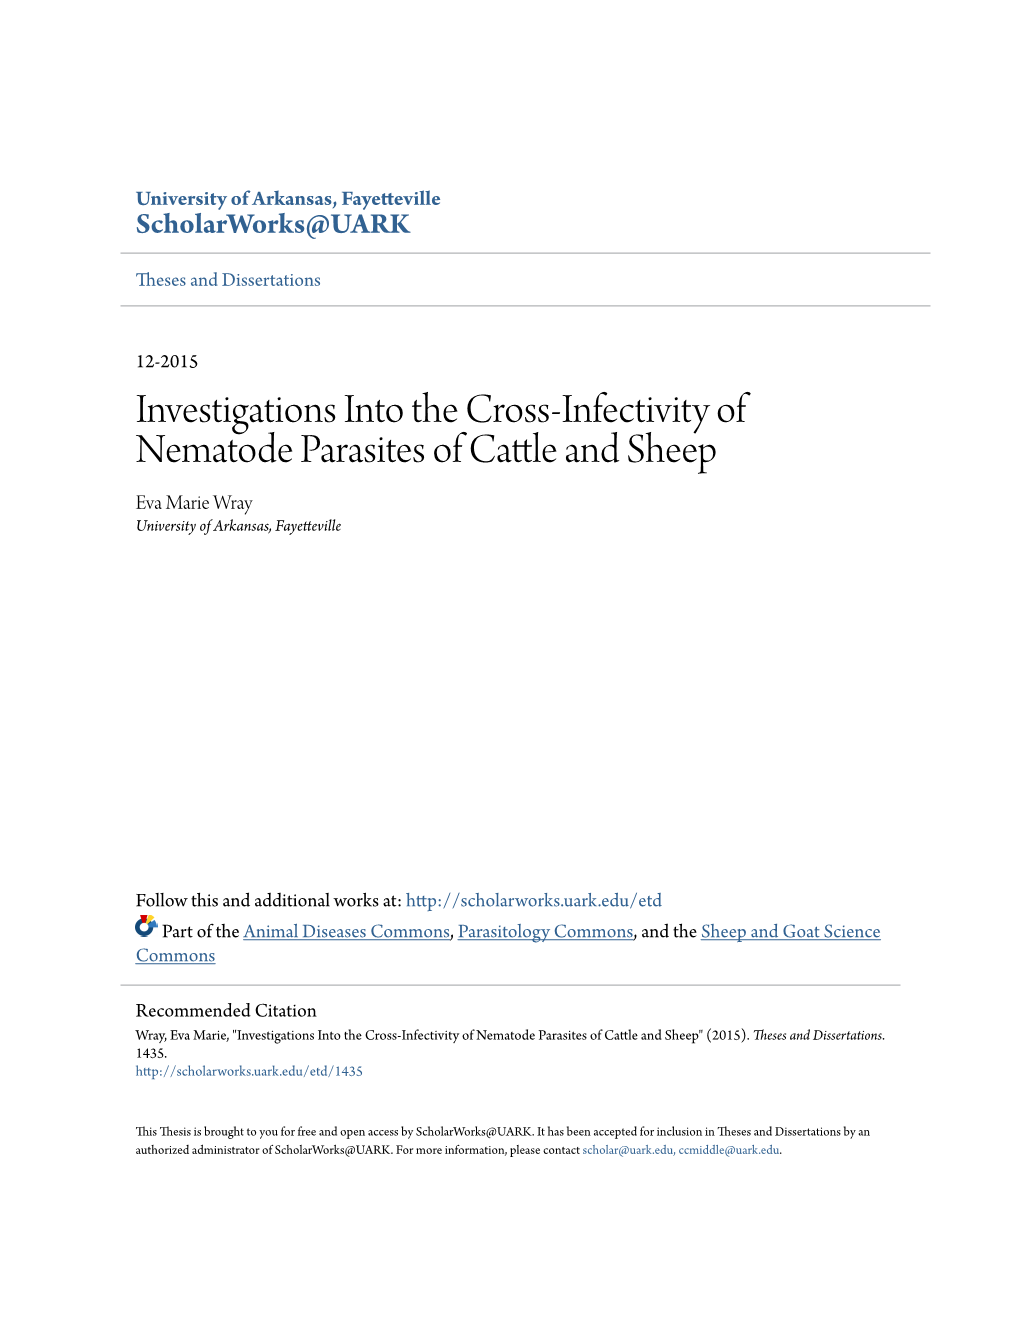 Investigations Into the Cross-Infectivity of Nematode Parasites of Cattle Nda Sheep Eva Marie Wray University of Arkansas, Fayetteville